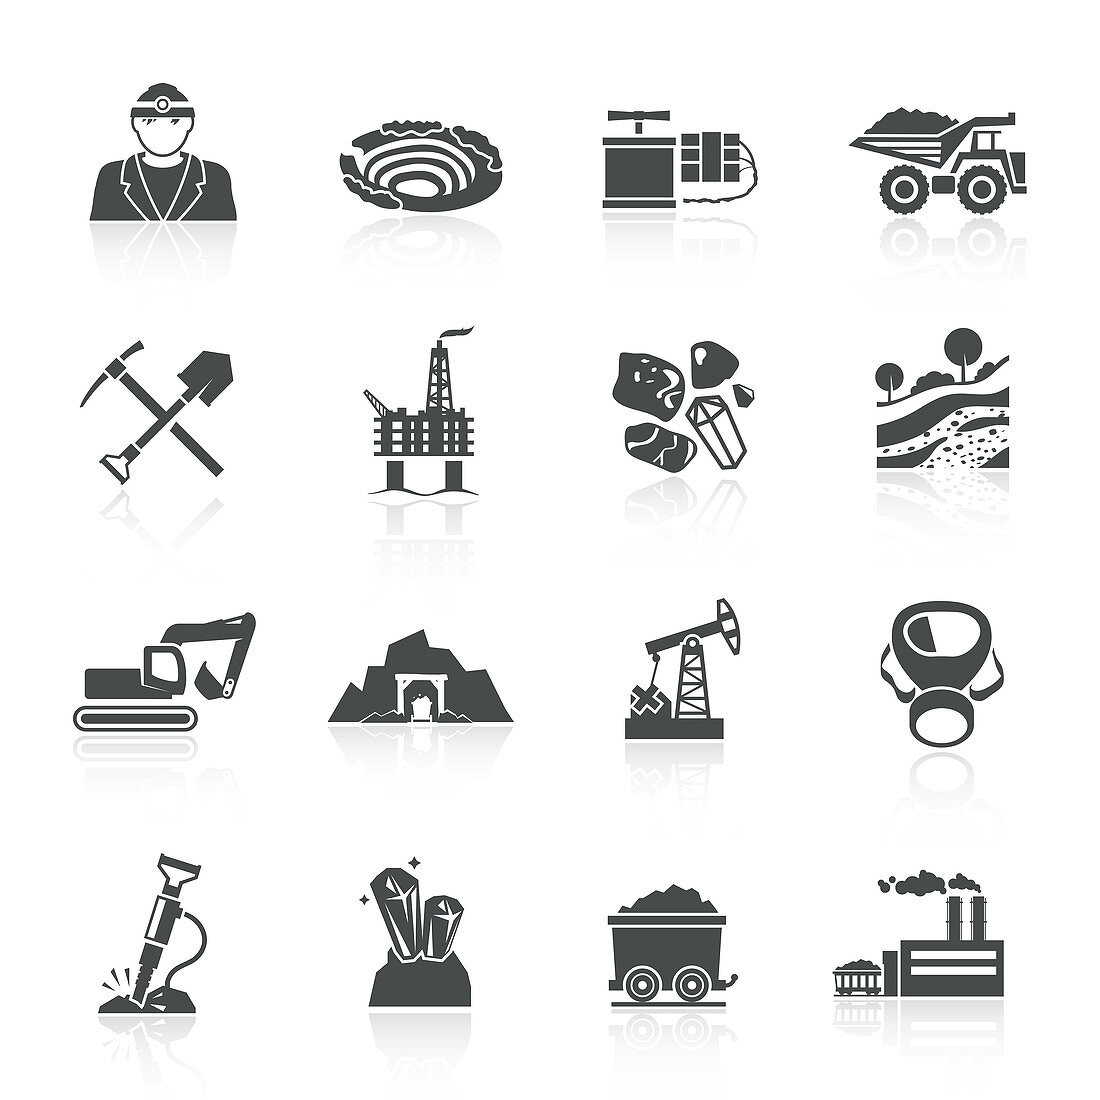 Mining icons, illustration